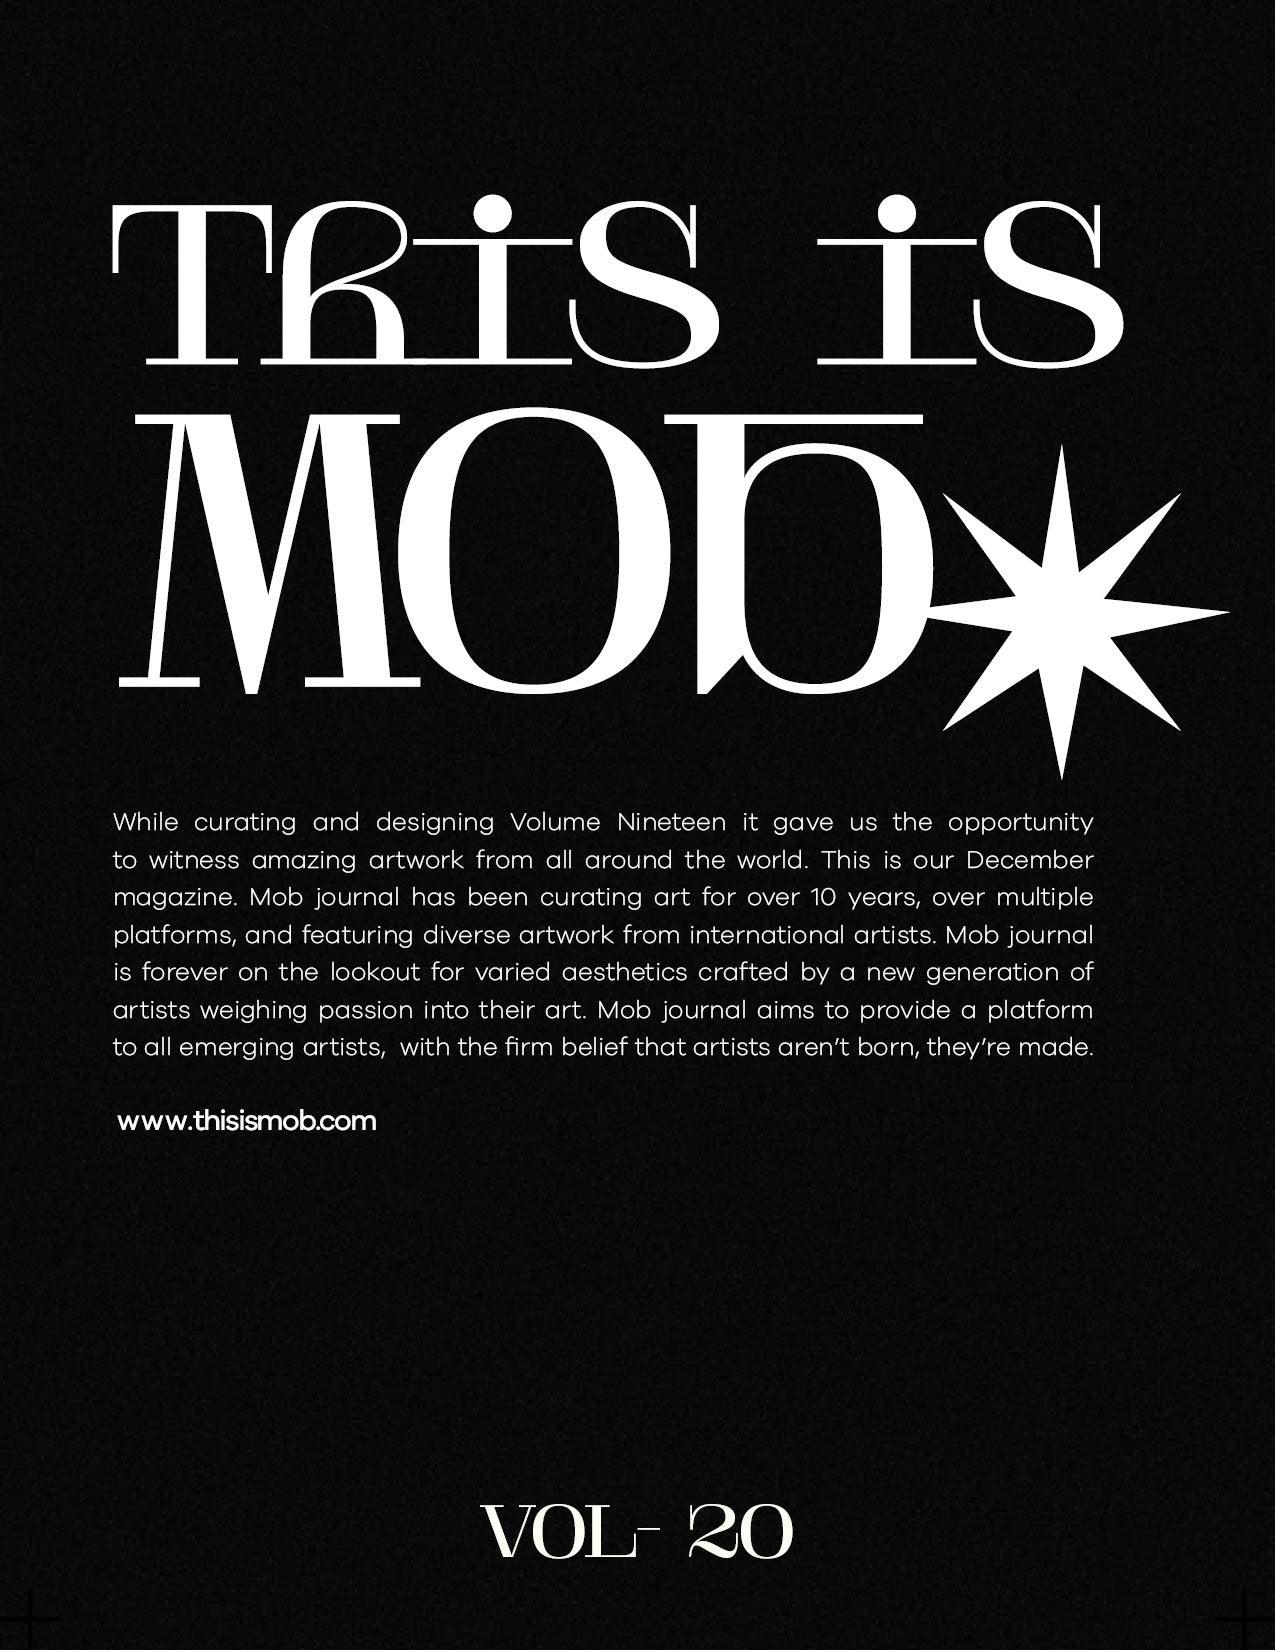 MOB JOURNAL | VOLUME TWENTY | ISSUE #17 - Mob Journal